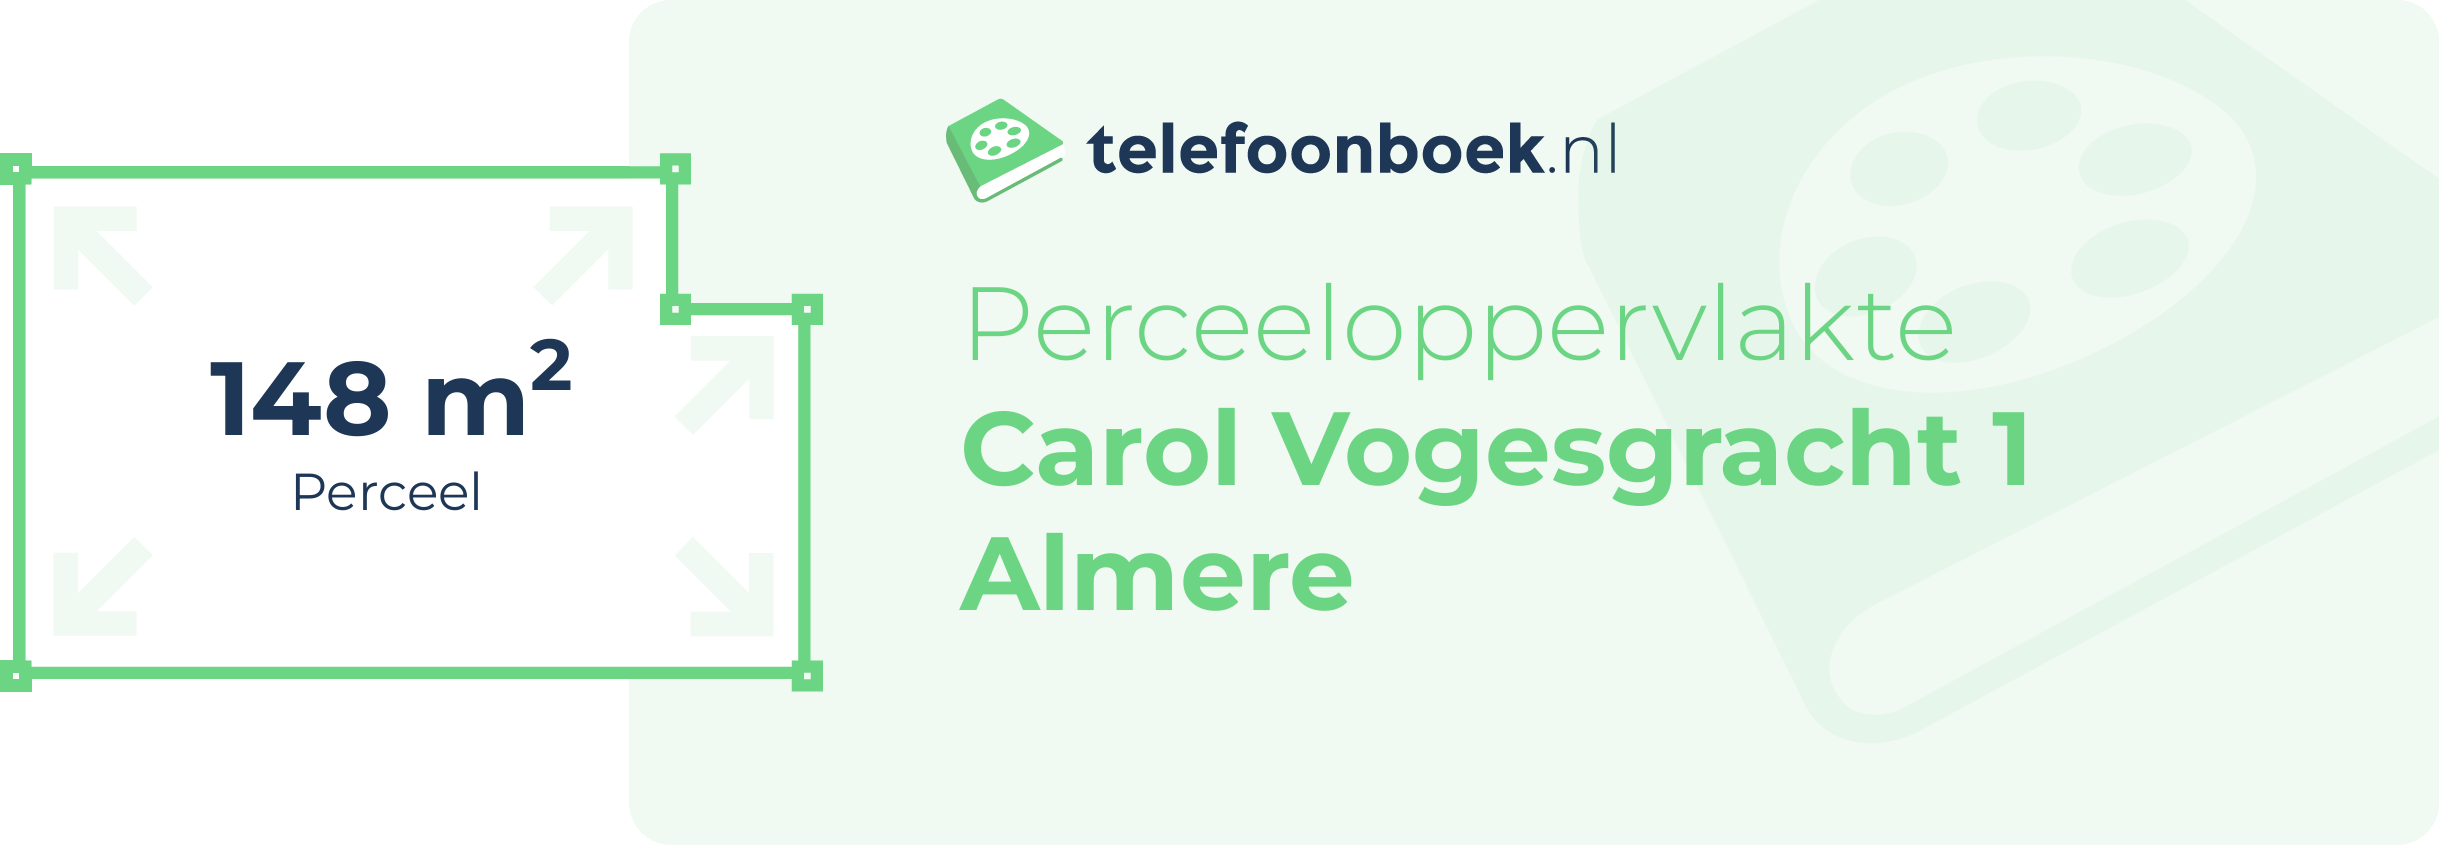 Perceeloppervlakte Carol Vogesgracht 1 Almere